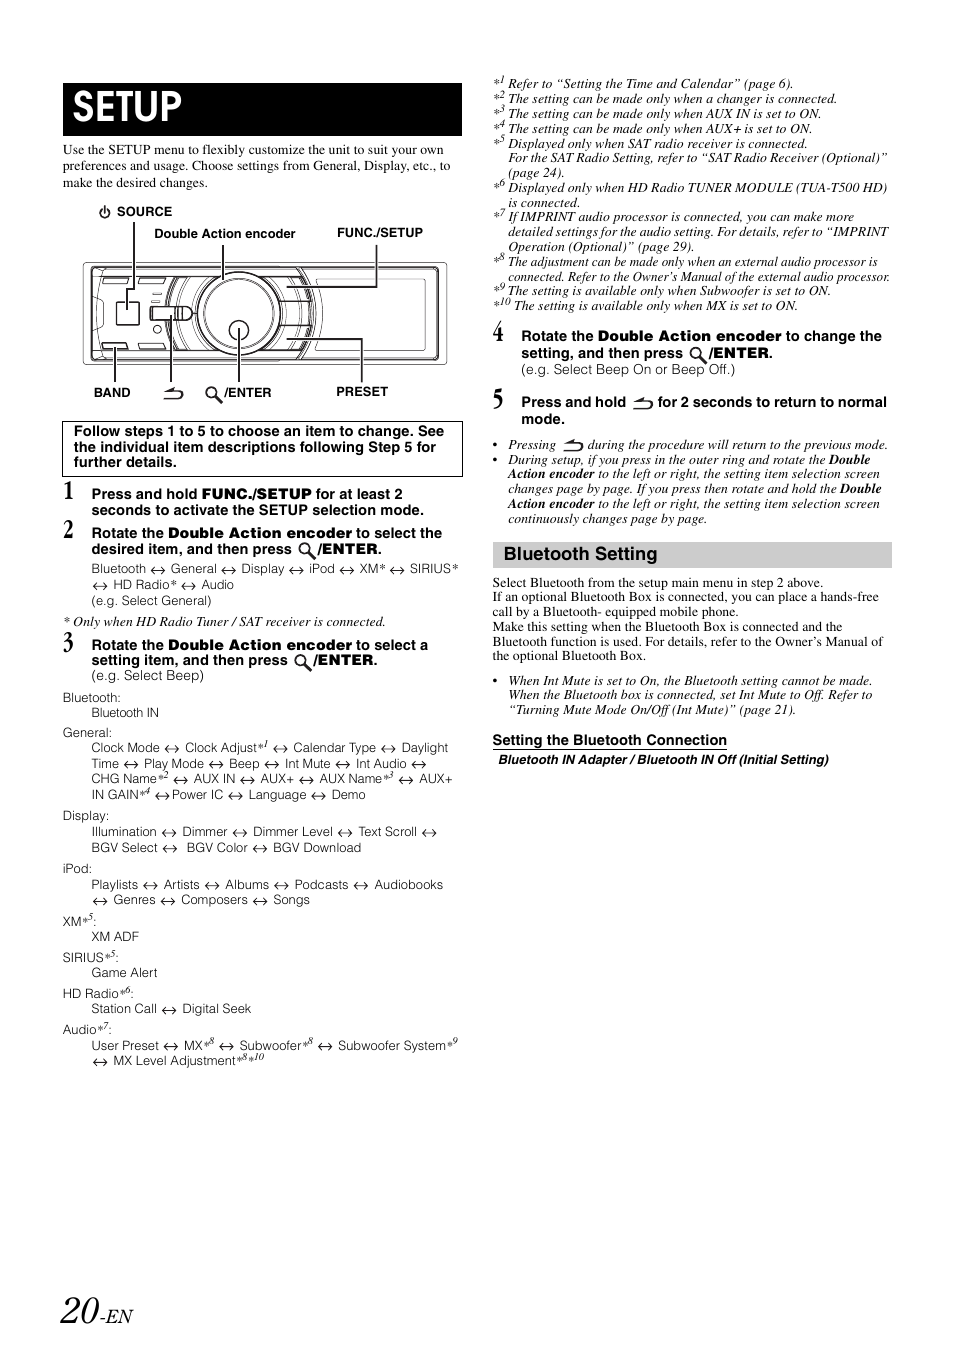 plein Harden elegant Setup, Bluetooth setting, Setting the bluetooth connection | Alpine IDA-X100  User Manual | Page 22 / 143